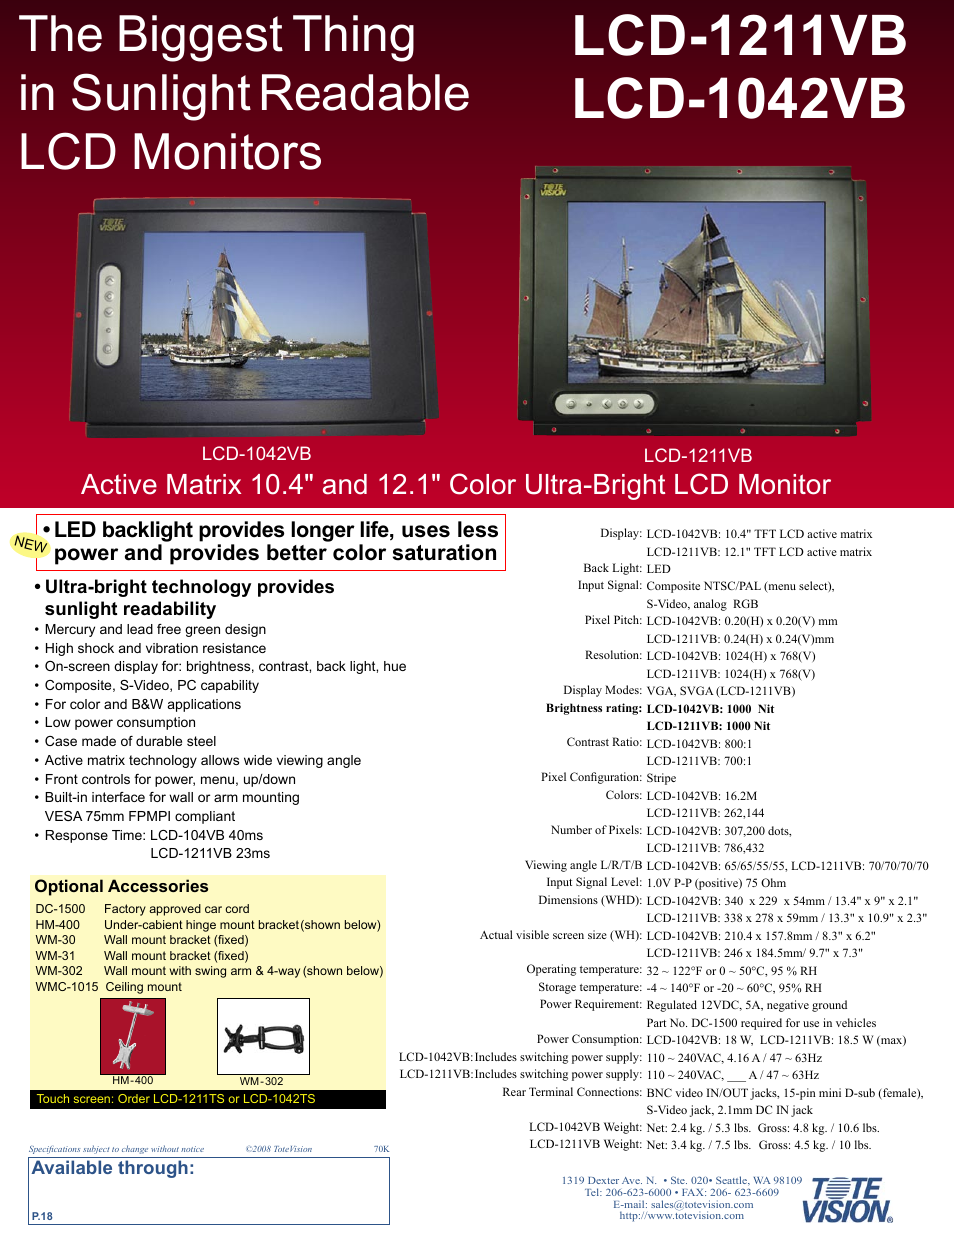 LCD-1042TS